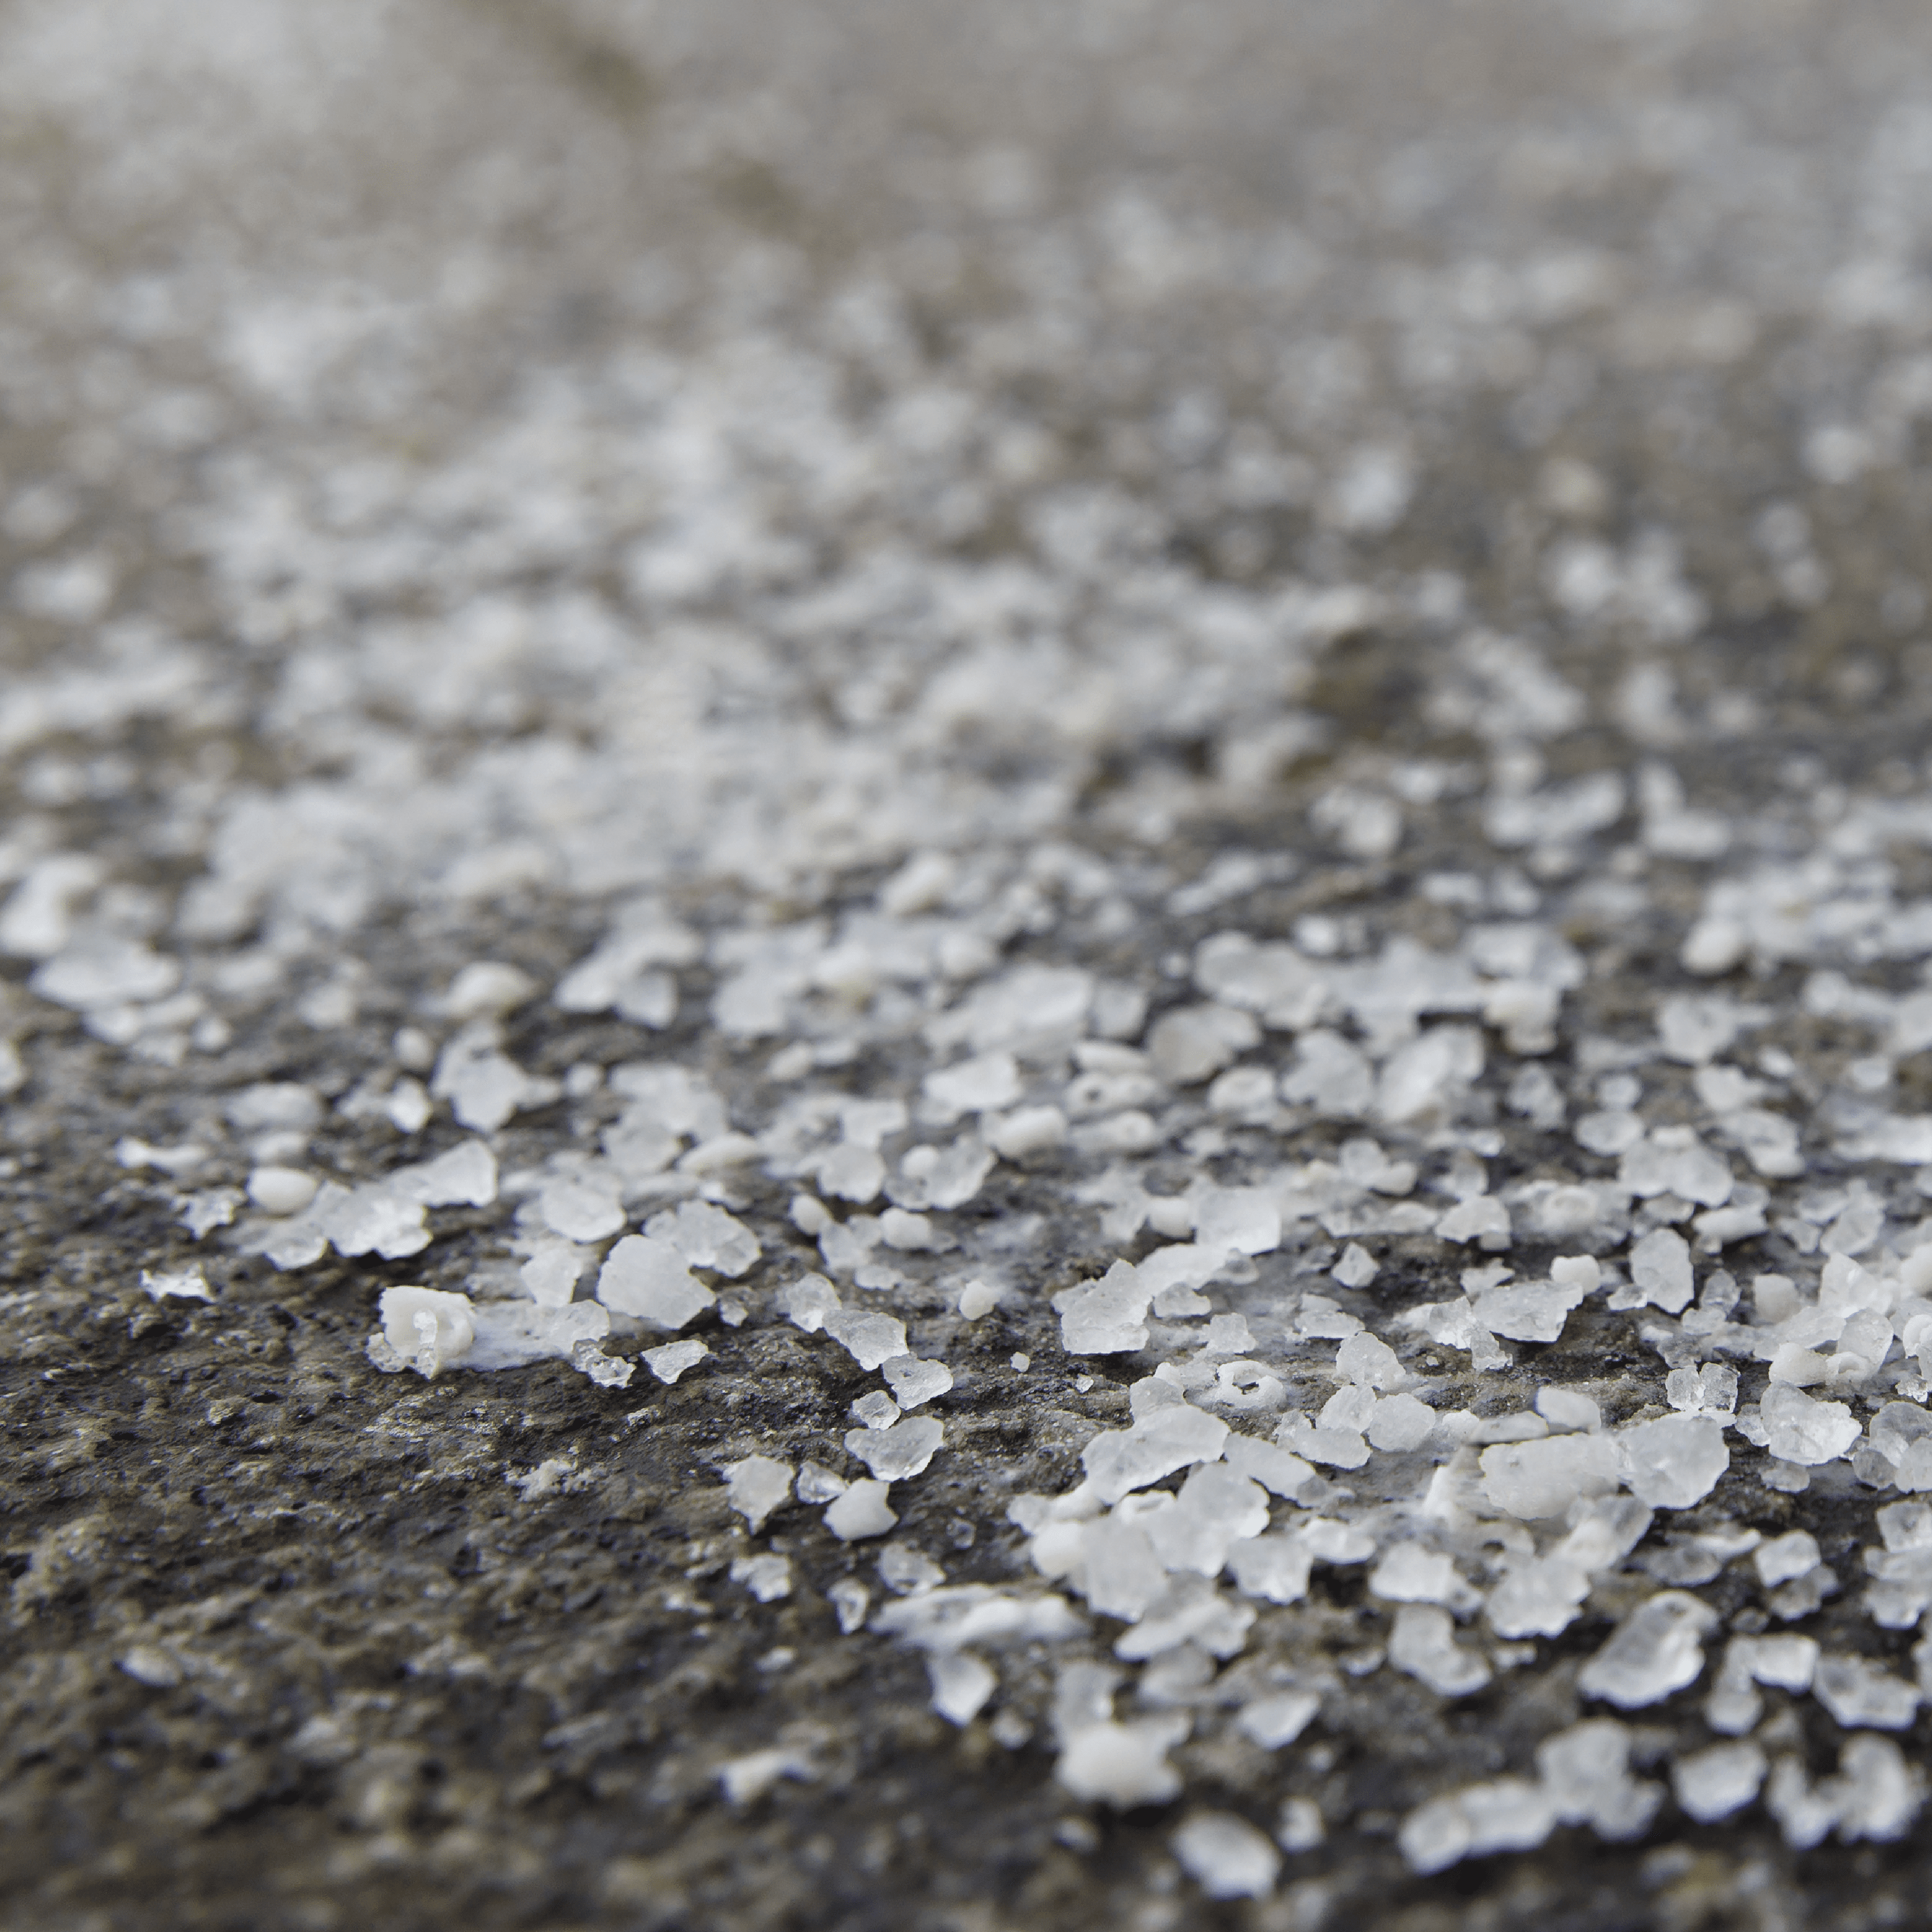 Road salt on the ground